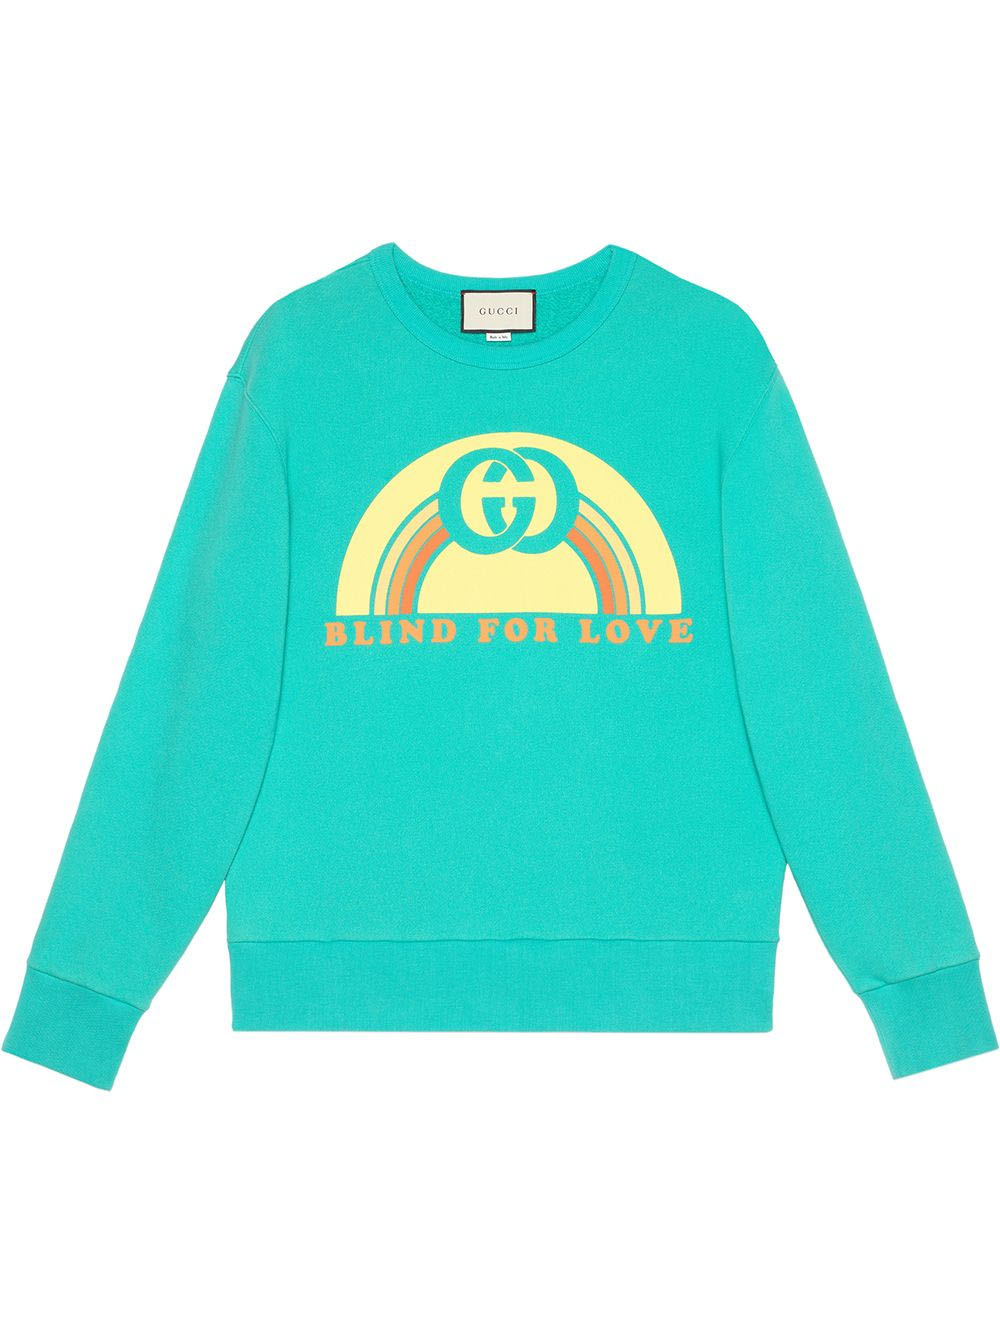 Gucci Sweatshirt with Rainbow Print